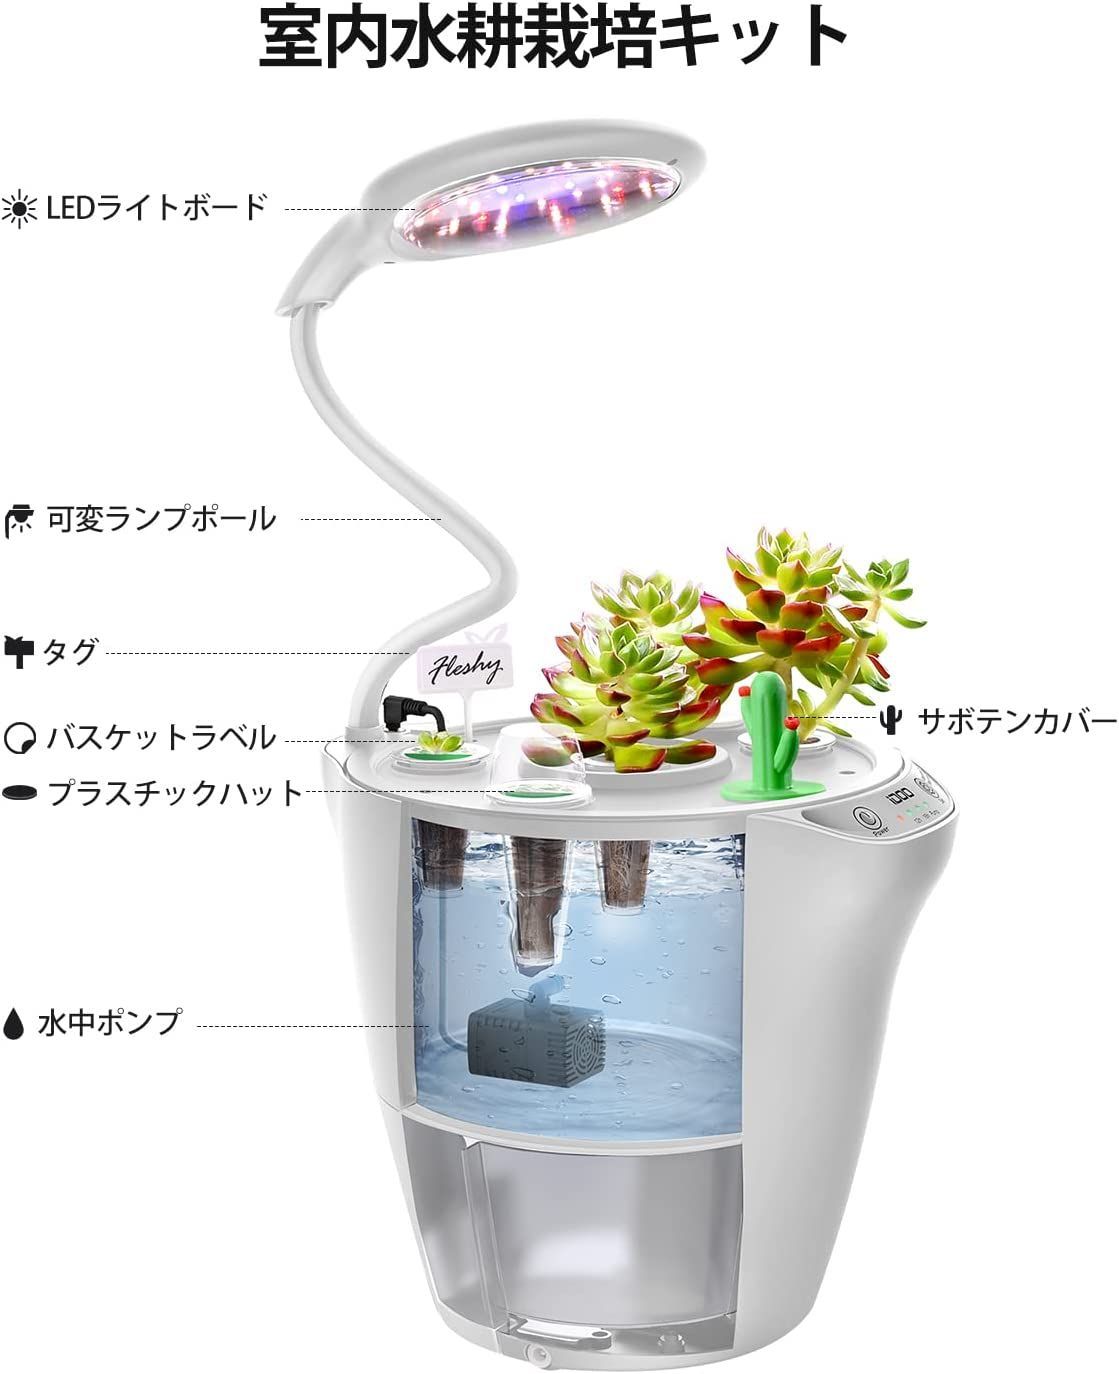 iDOO イドー 水耕栽培キット すいこう栽培キット 家庭菜園 室内 水耕栽培 水中ポンプ搭載 同時に8株野菜栽培可能 植物育成LEDライト - 5